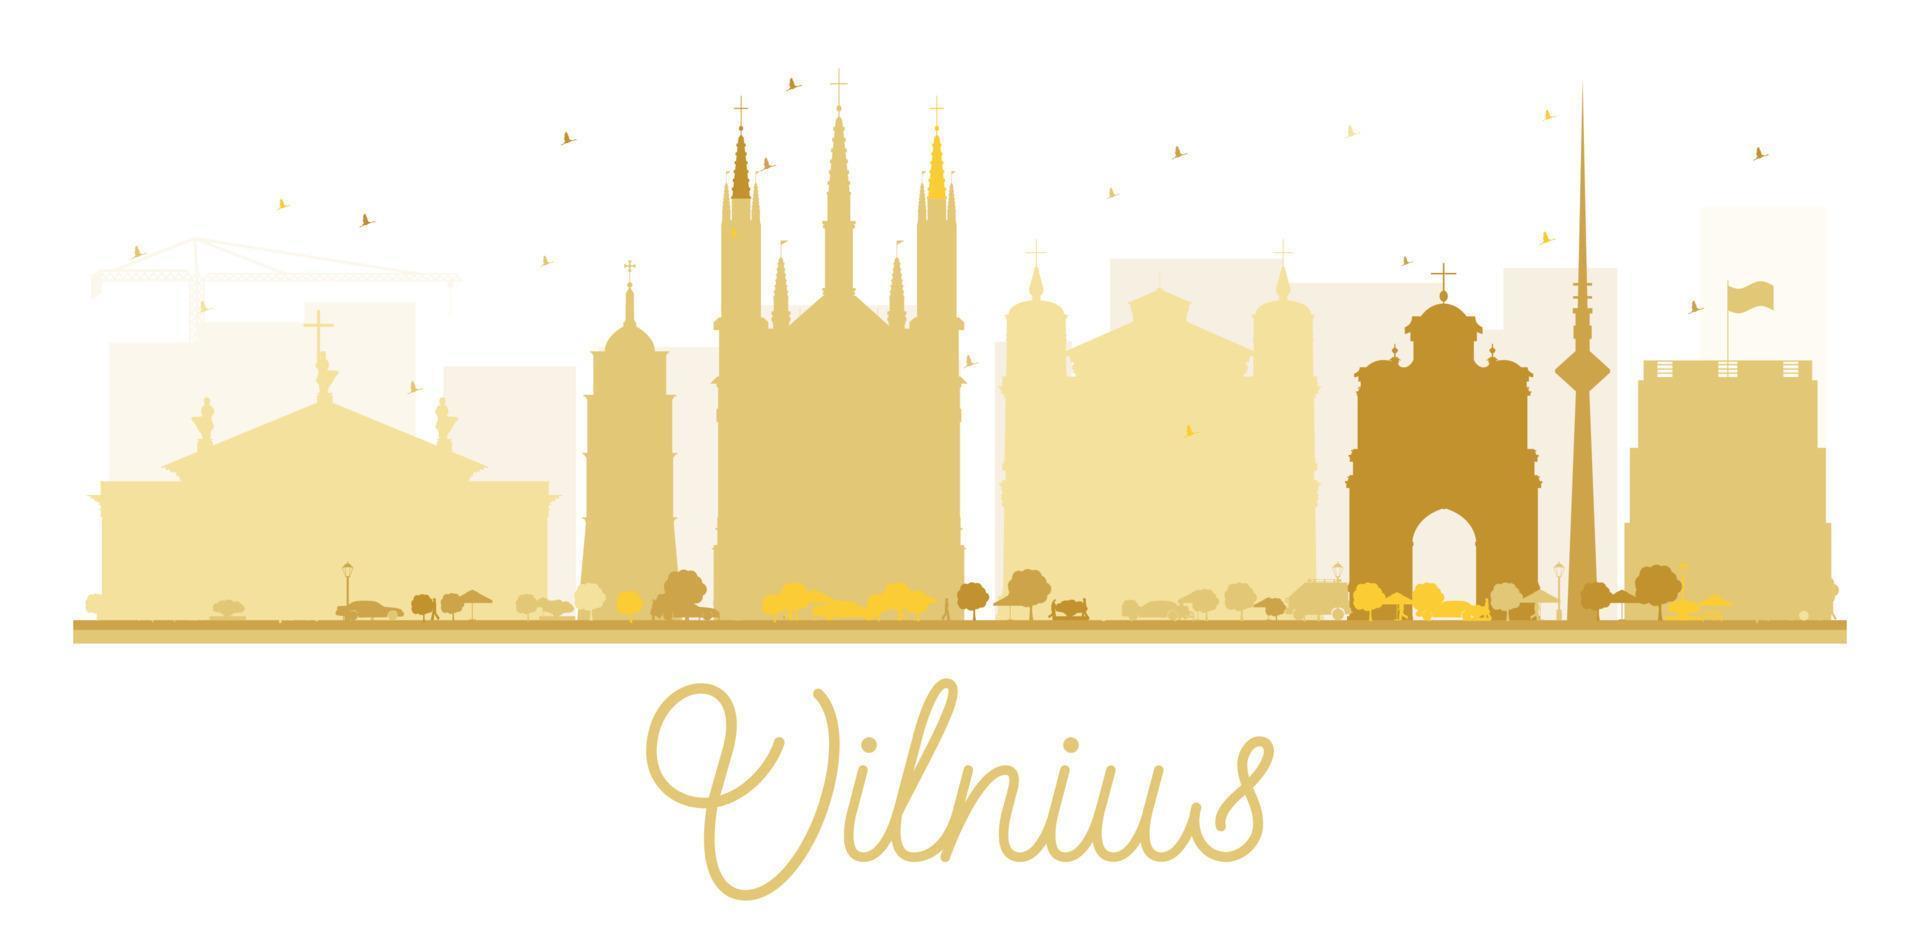 silhueta dourada do horizonte da cidade de vilnius. vetor